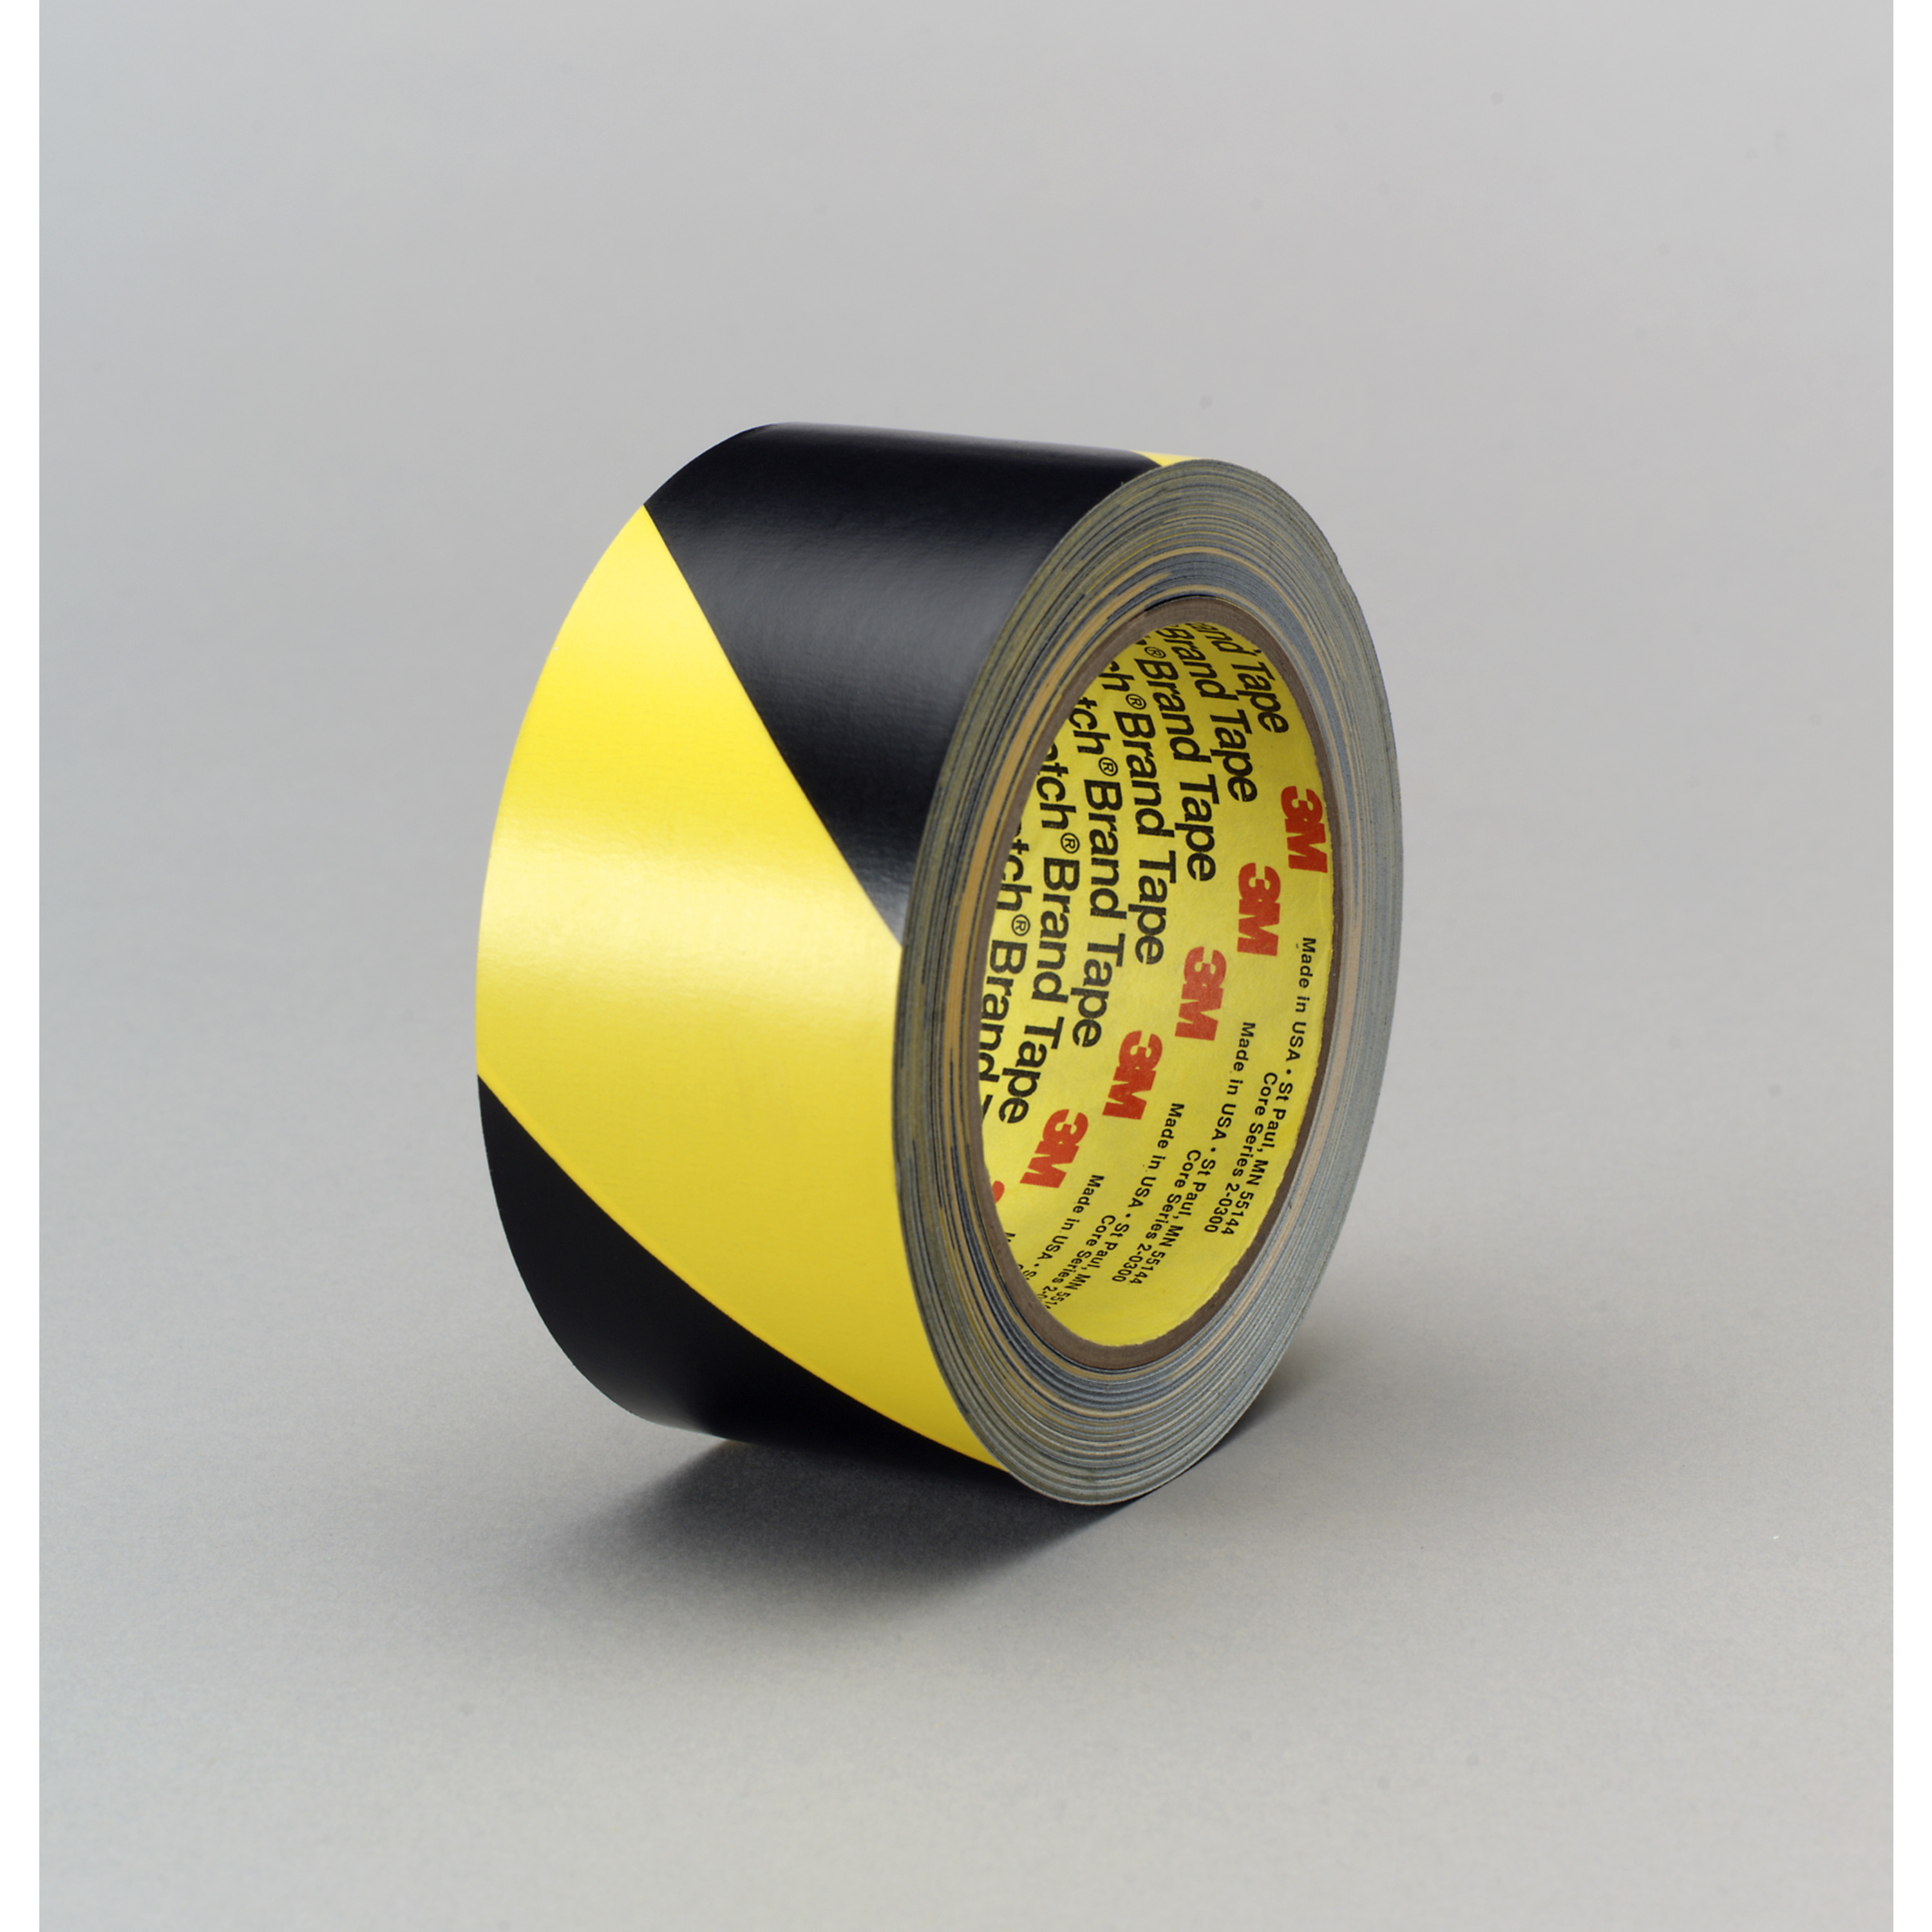 3M™ Safety Stripe Tape 5702, Black/Yellow, 1 in x 36 yd, 5.4 mil, 36
rolls per case